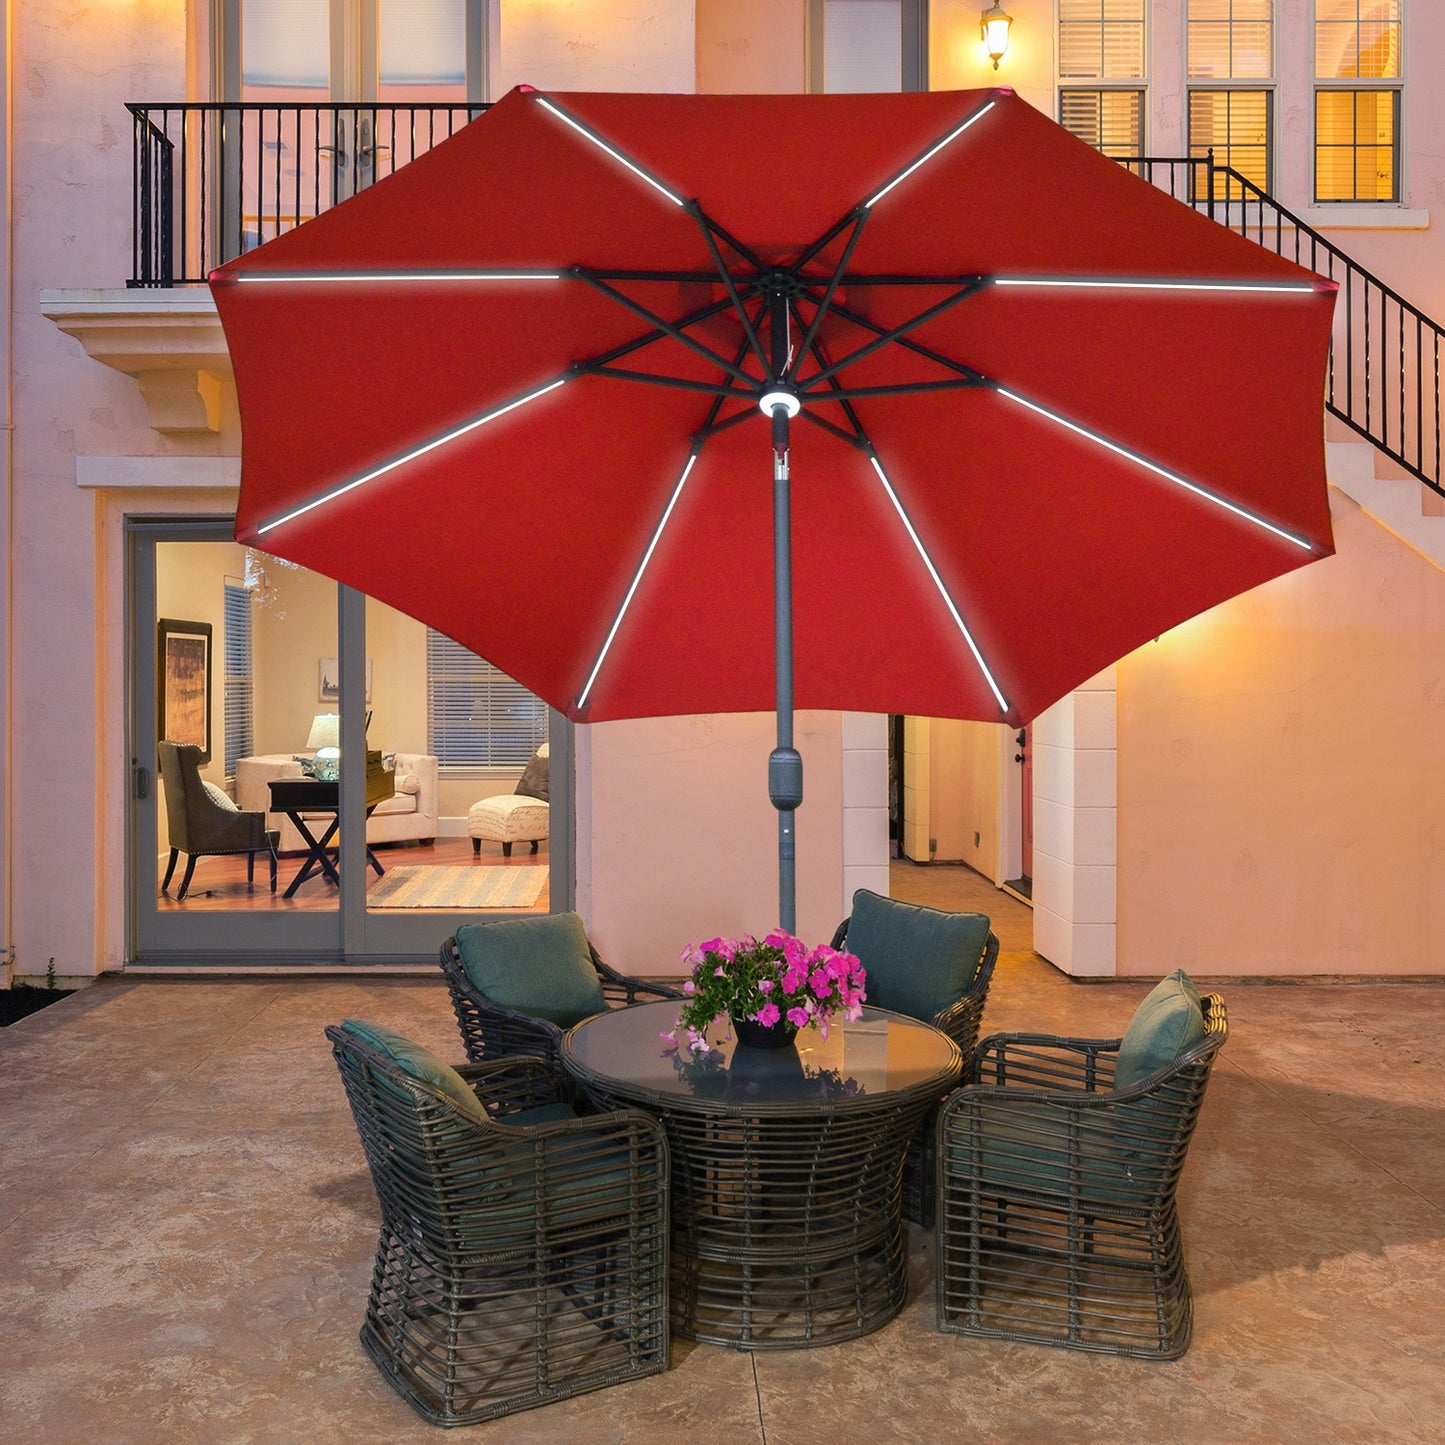 Outsunny 2.7m Garden Parasol Sun Umbrella Patio Summer Shelter w/ LED Solar Light, Angled Canopy, Vent, Crank Tilt, Red Light Canopy